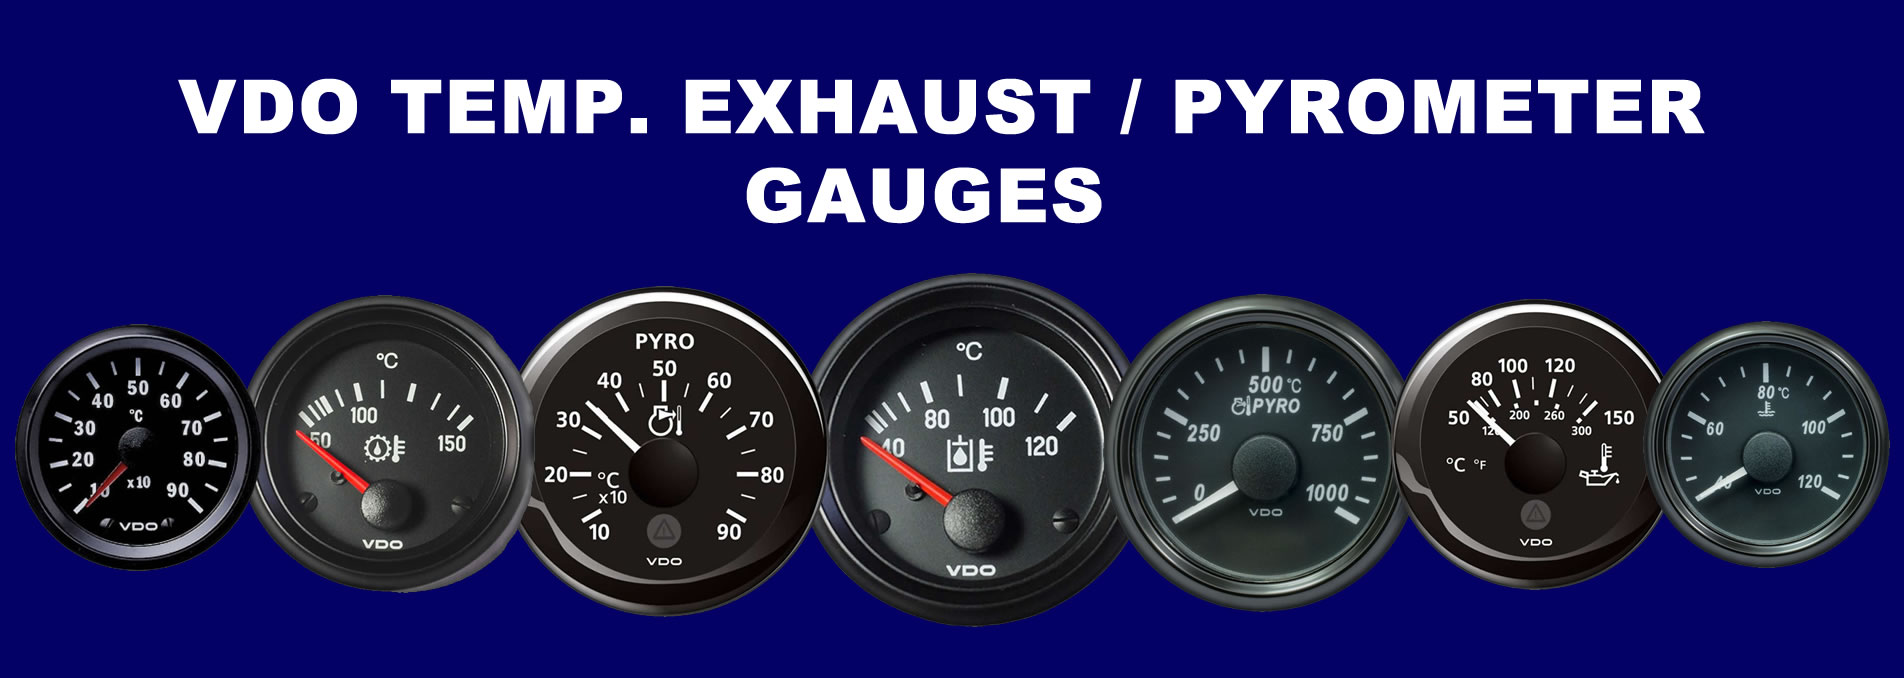 temp-pyrometer-exhaust gauges banner